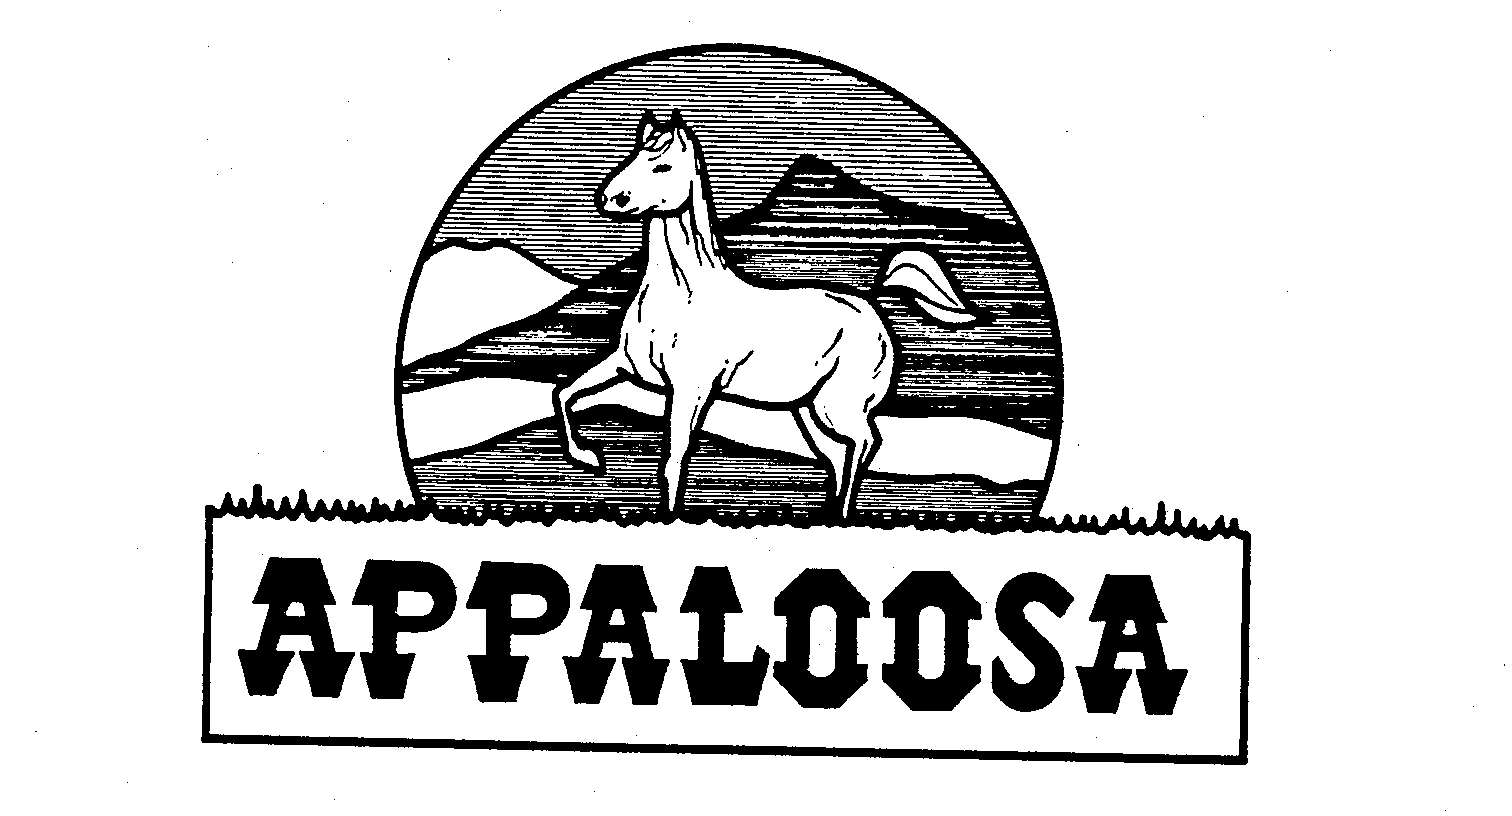 Trademark Logo APPALOOSA